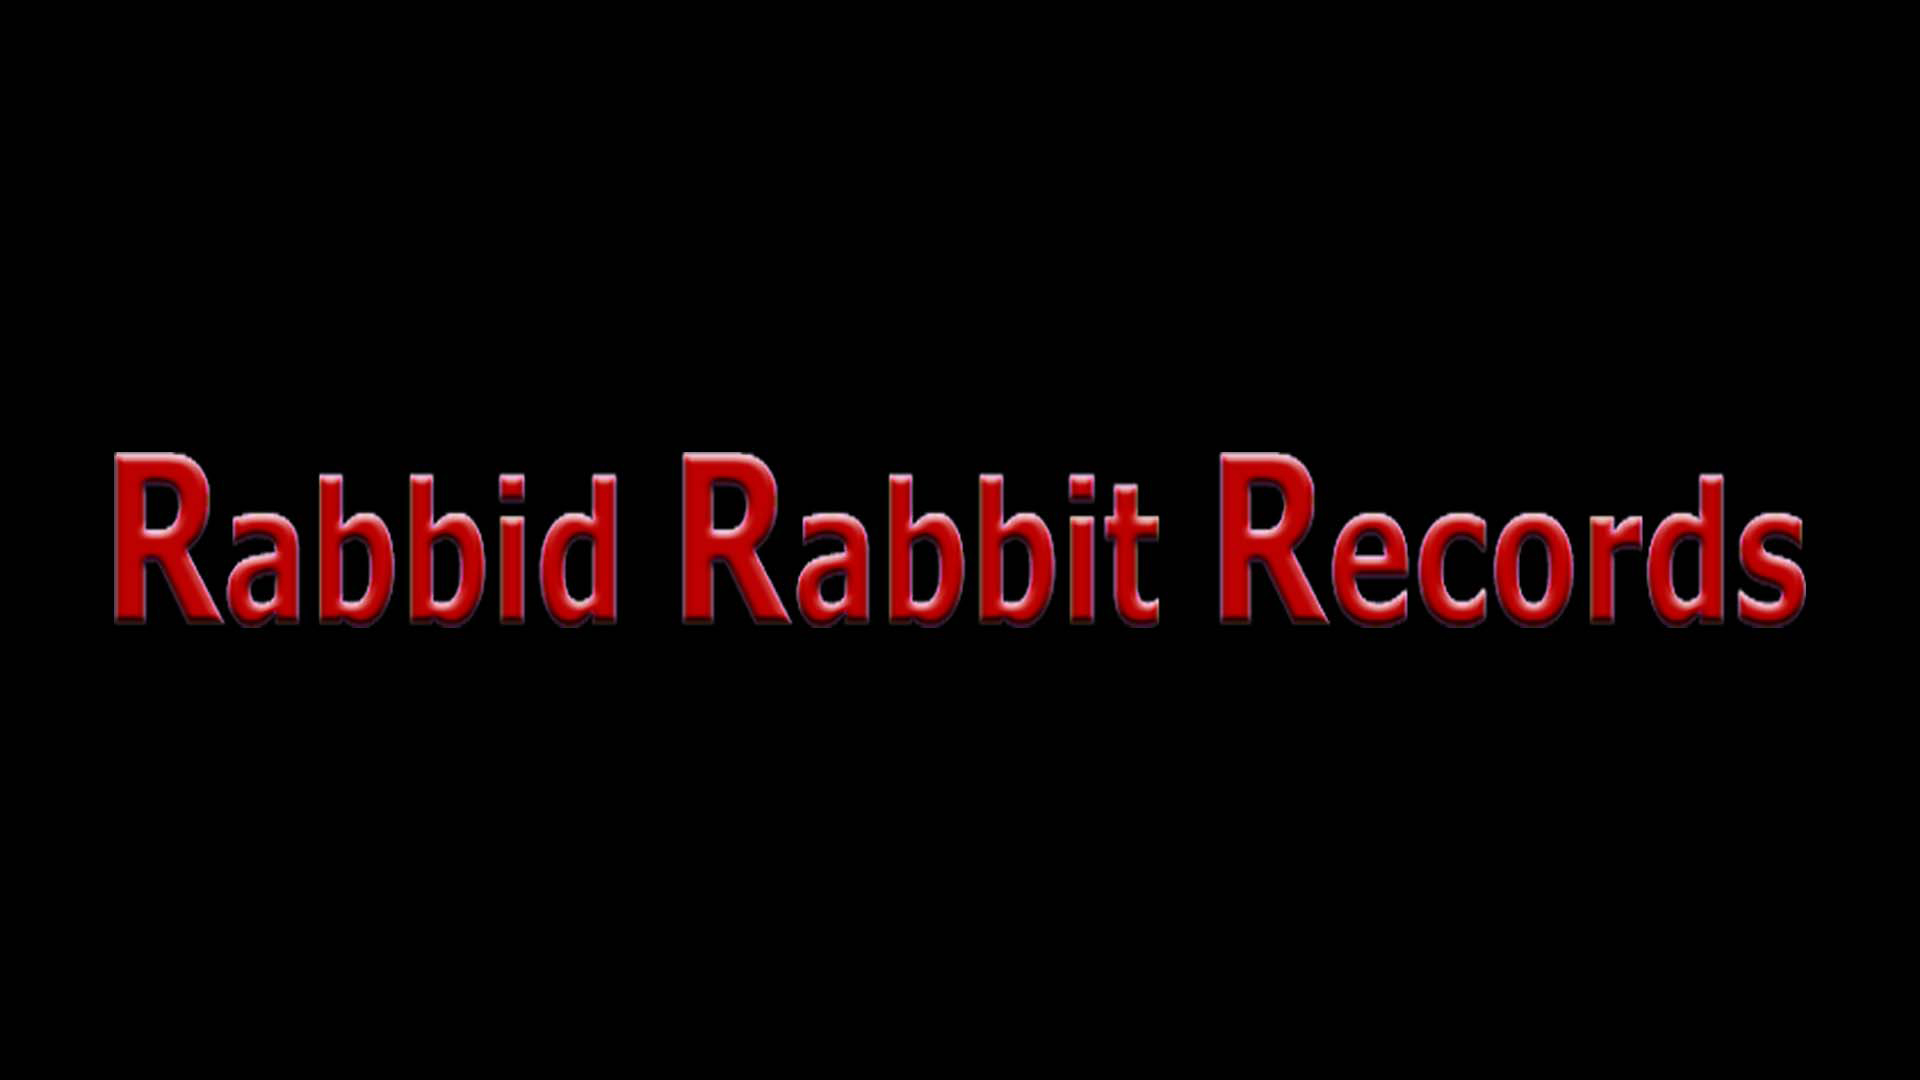 Rabbid Rabbit Records Golden Grain Release Party